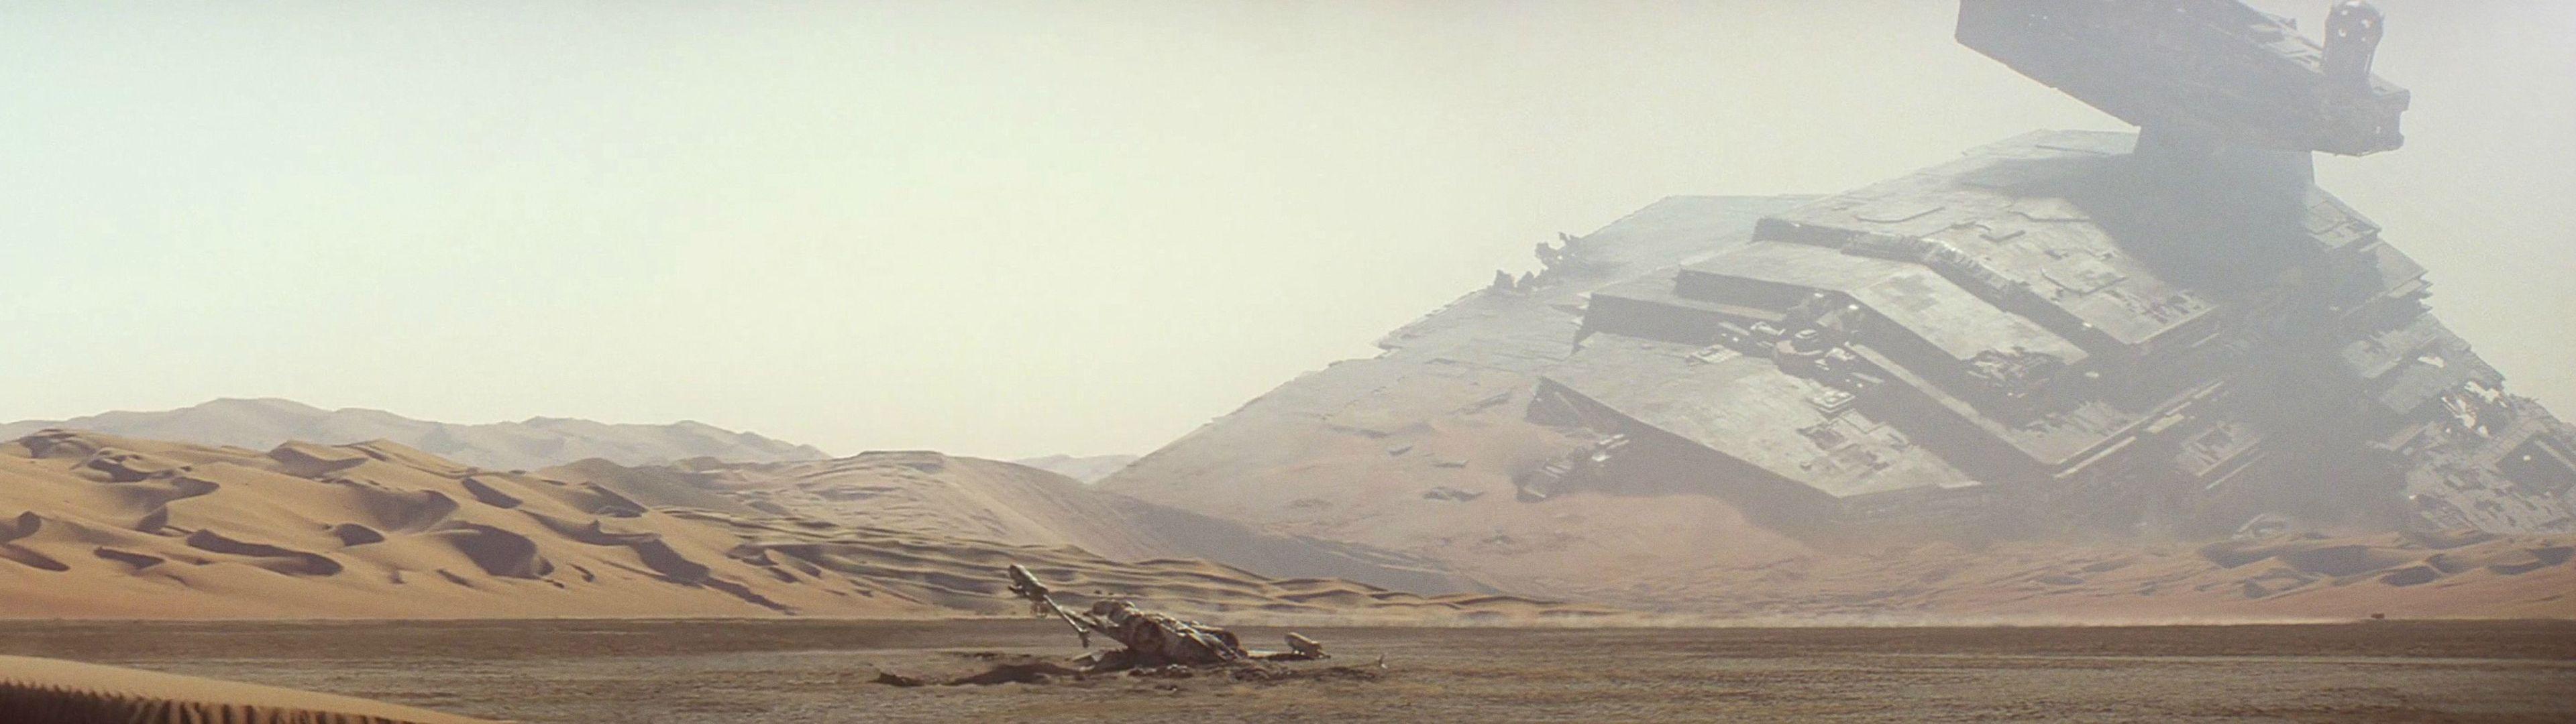 Tatooine Wallpaper Group (78)